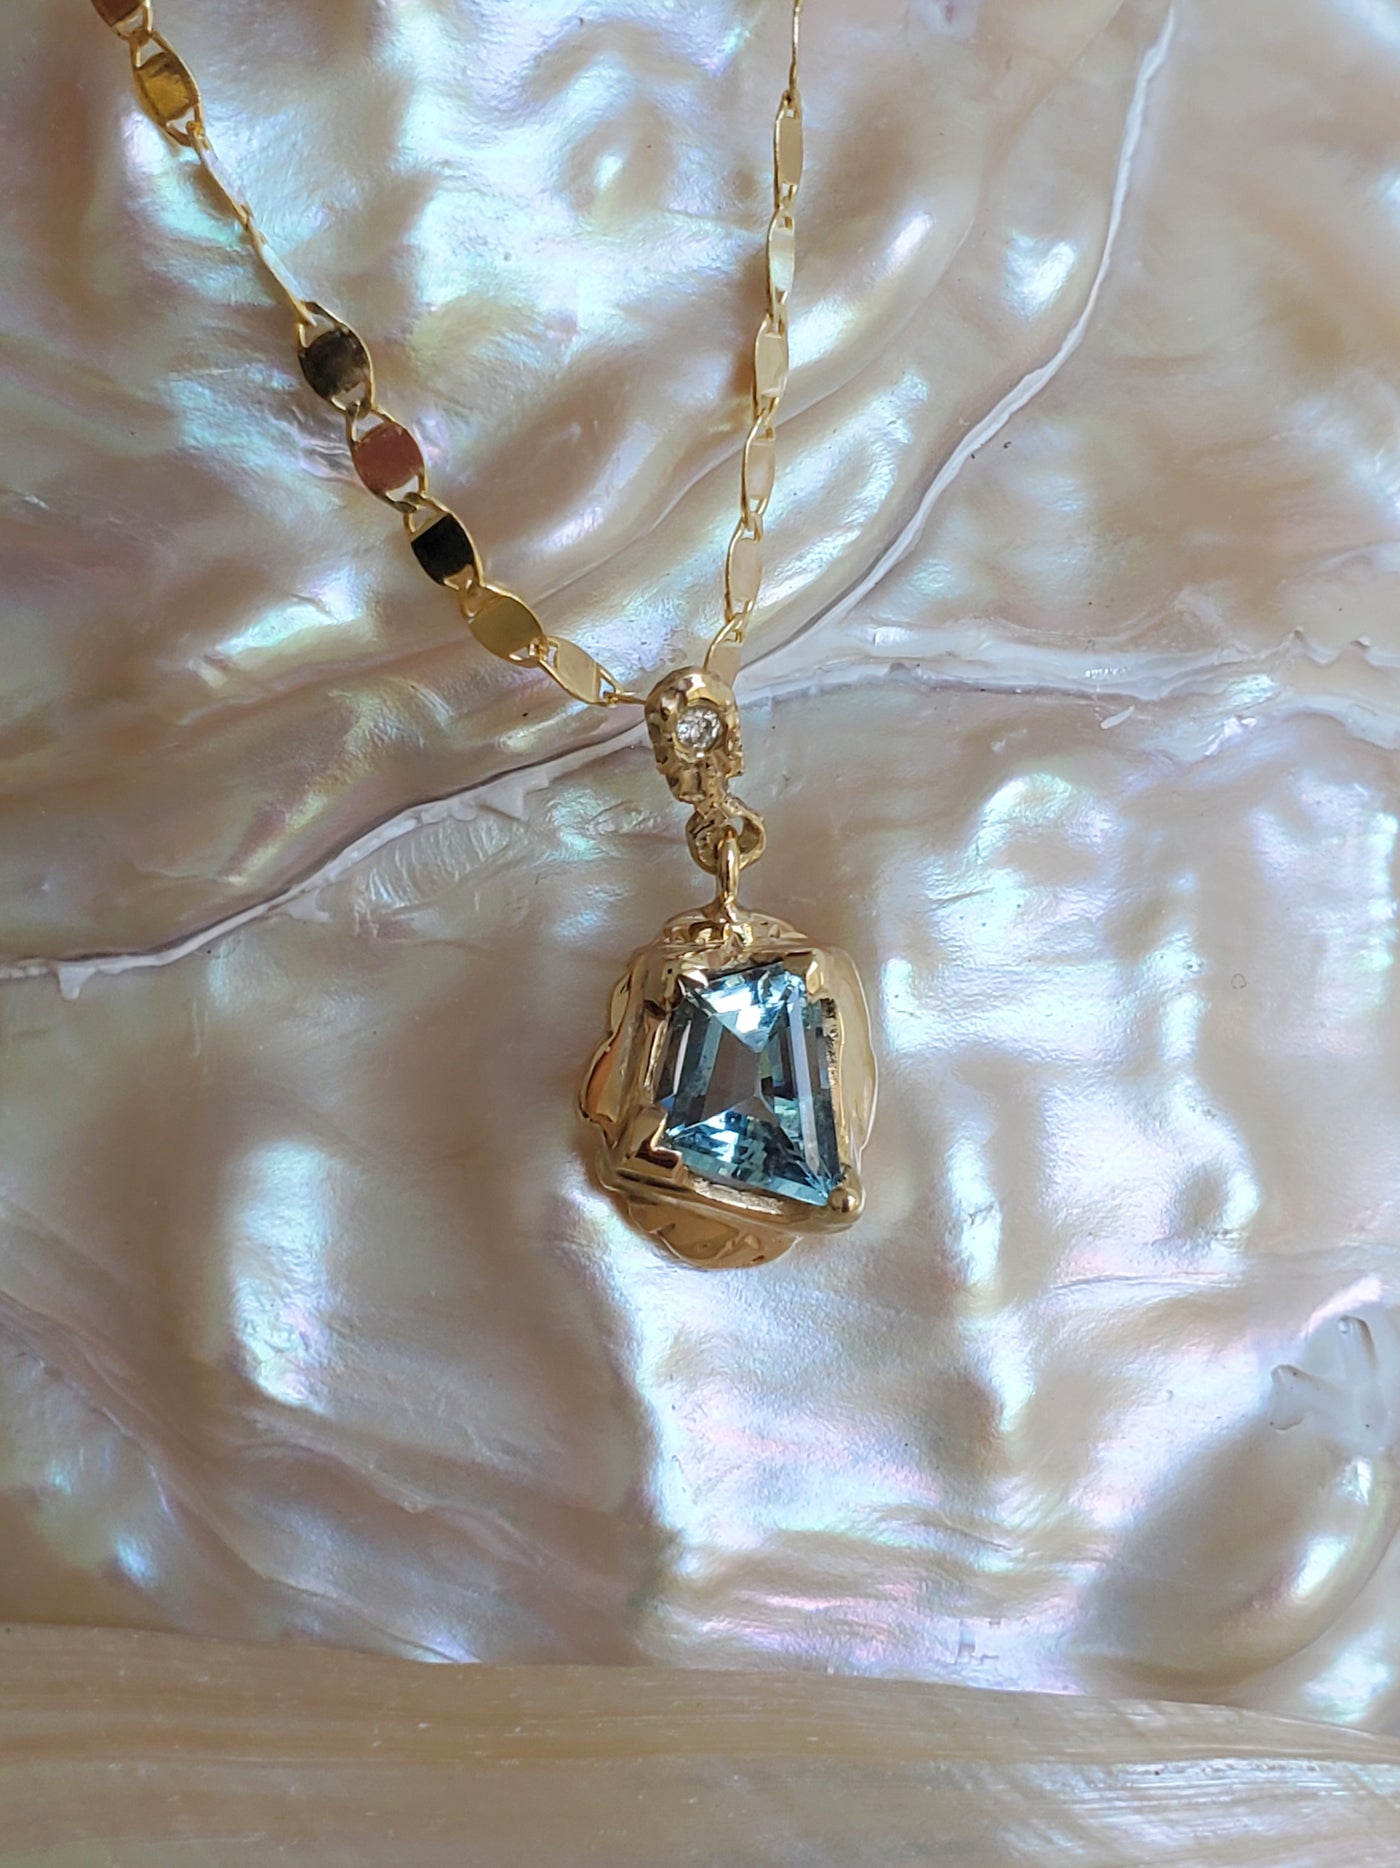 Reserved * Enchanted Aquamarine Necklace